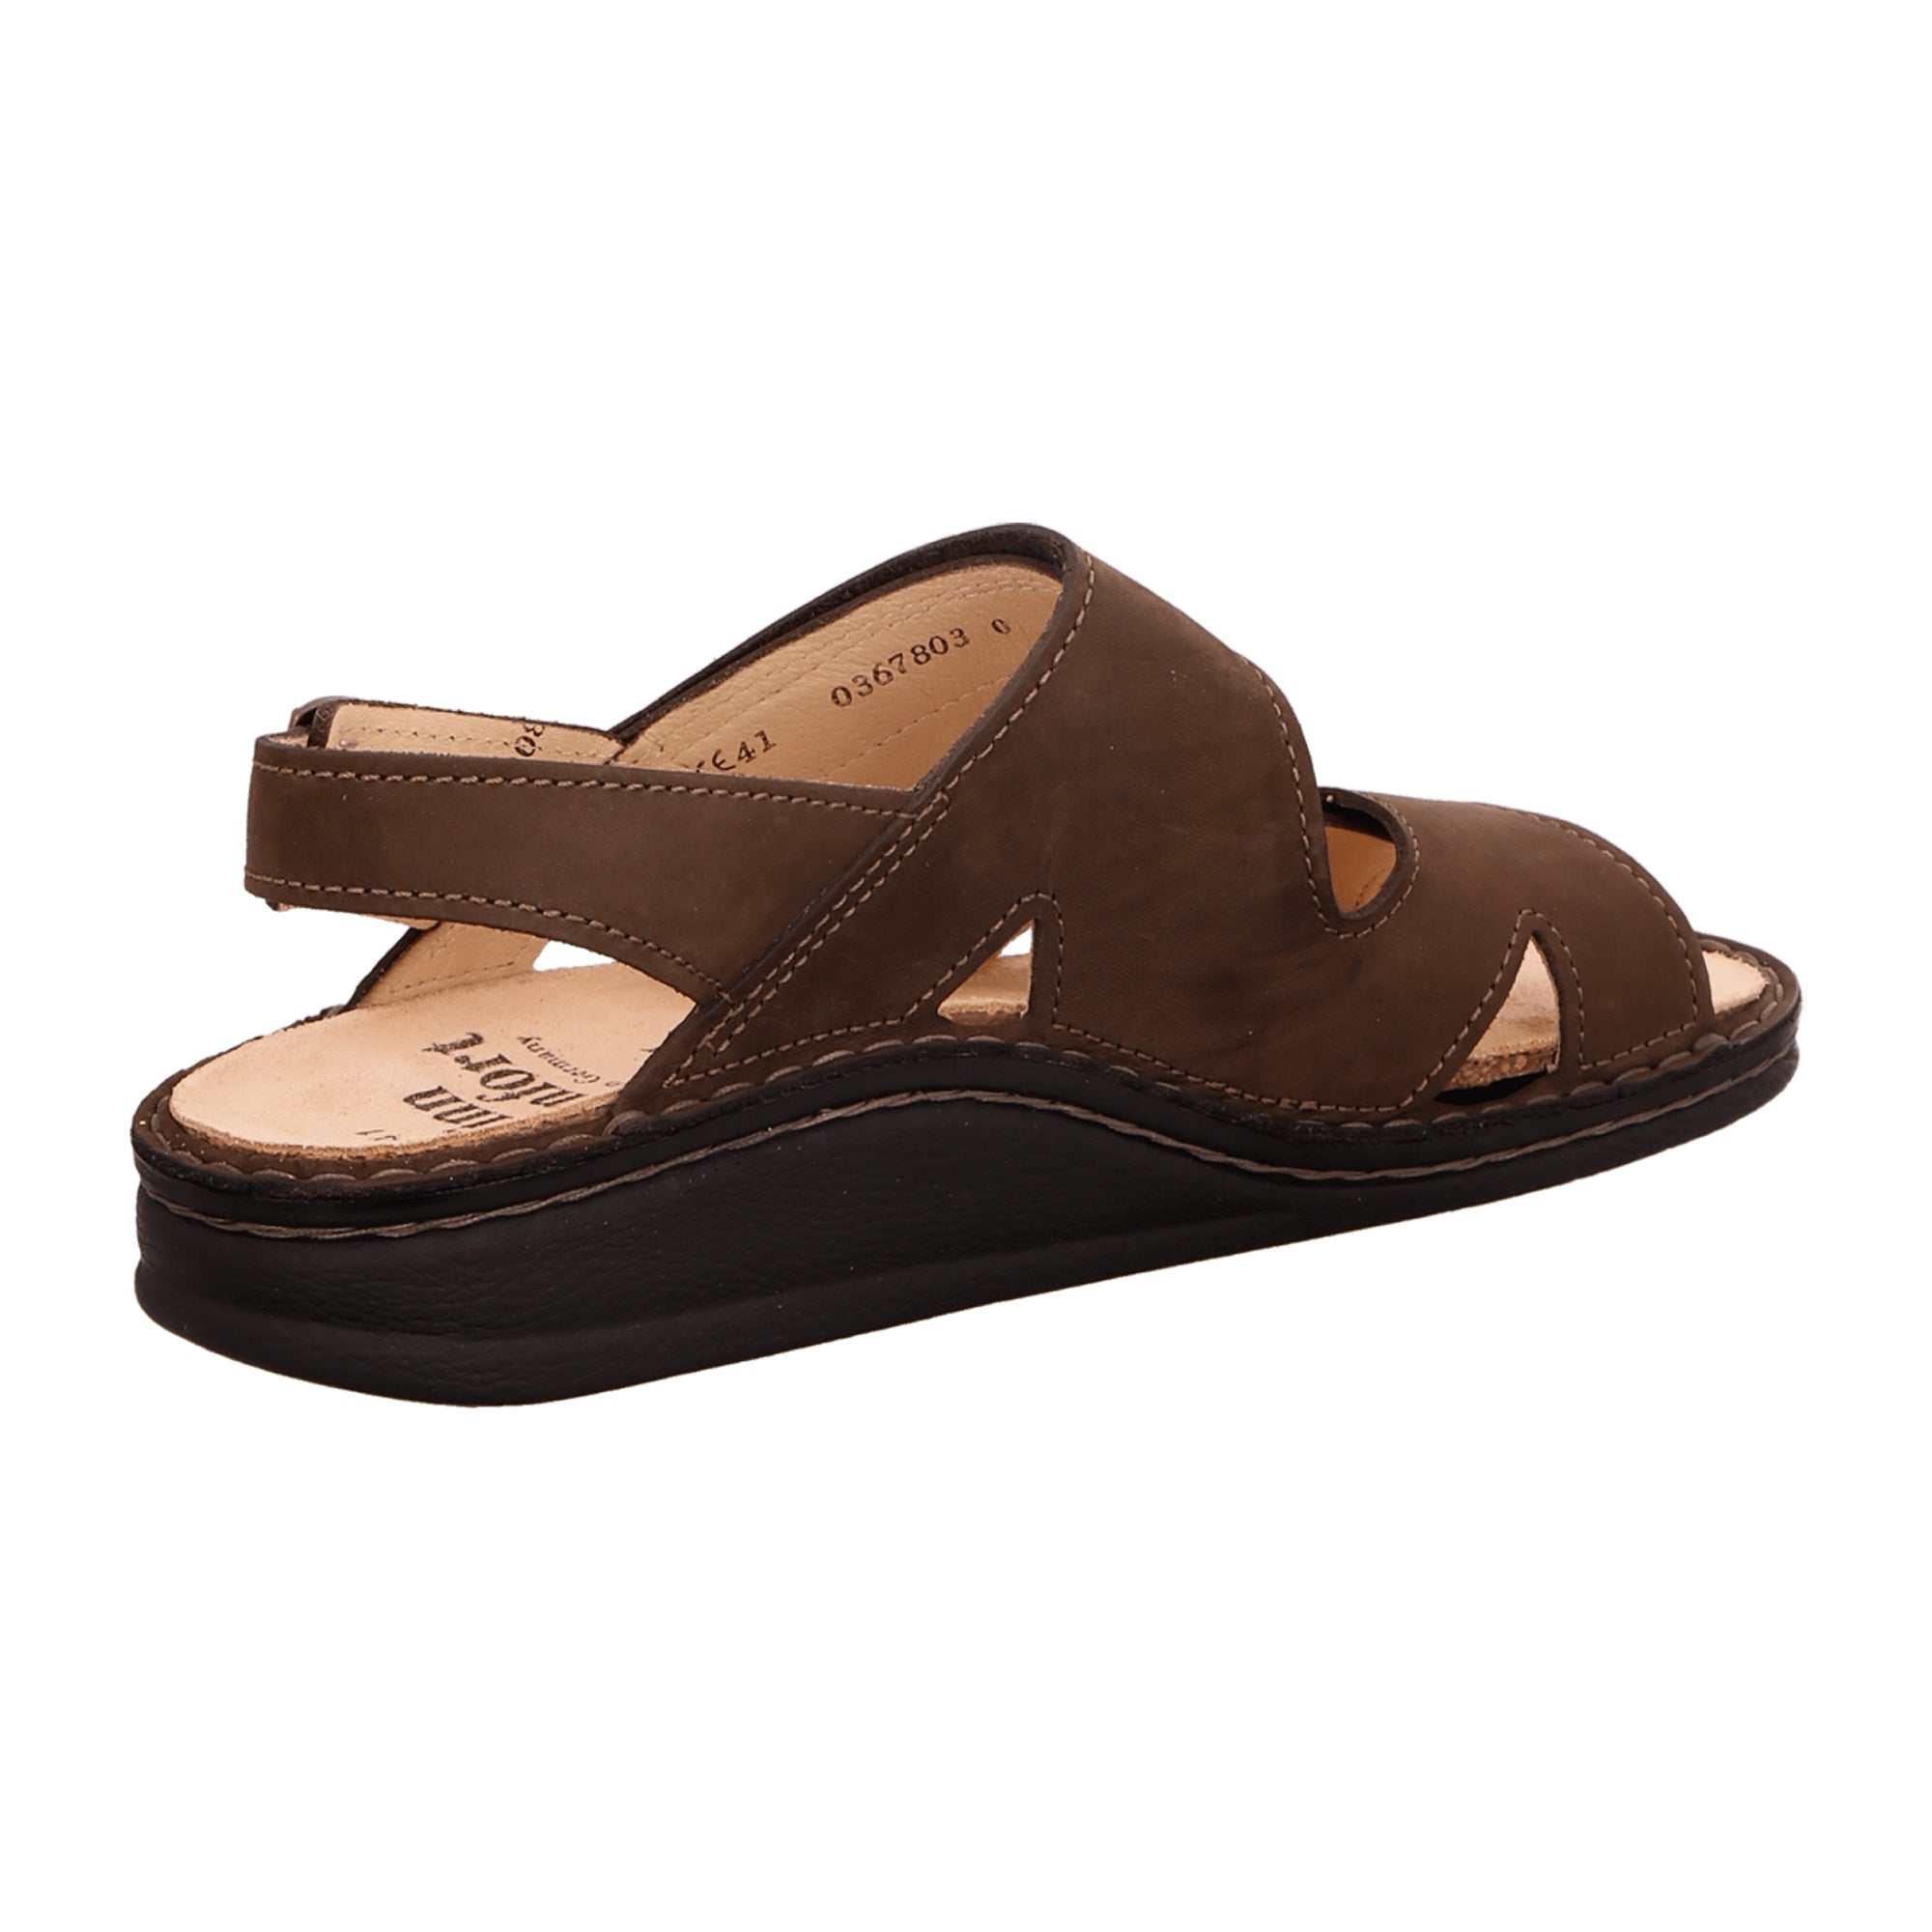 Finn Comfort Toro Soft Men's Sandals - Durable & Stylish in Brown